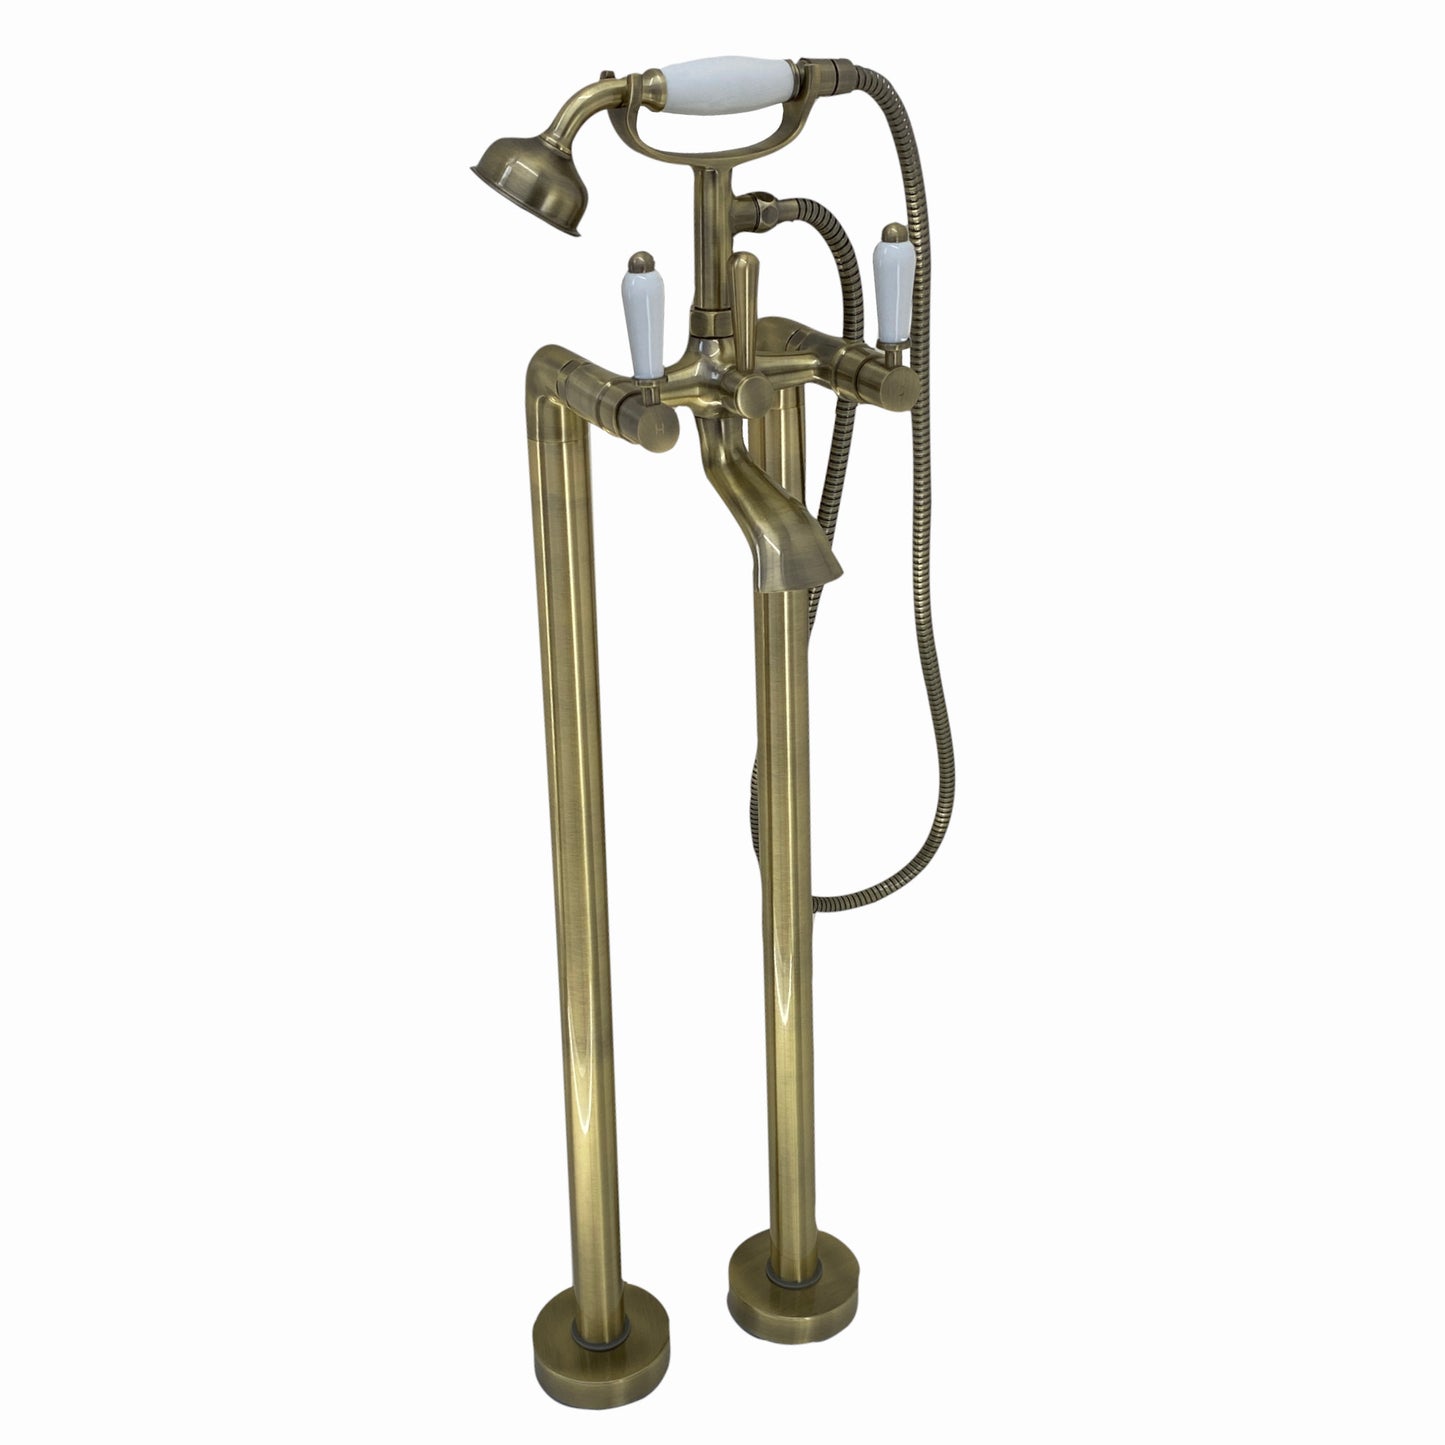 Downton floorstanding bath shower mixer tap with white ceramic levers - antique bronze